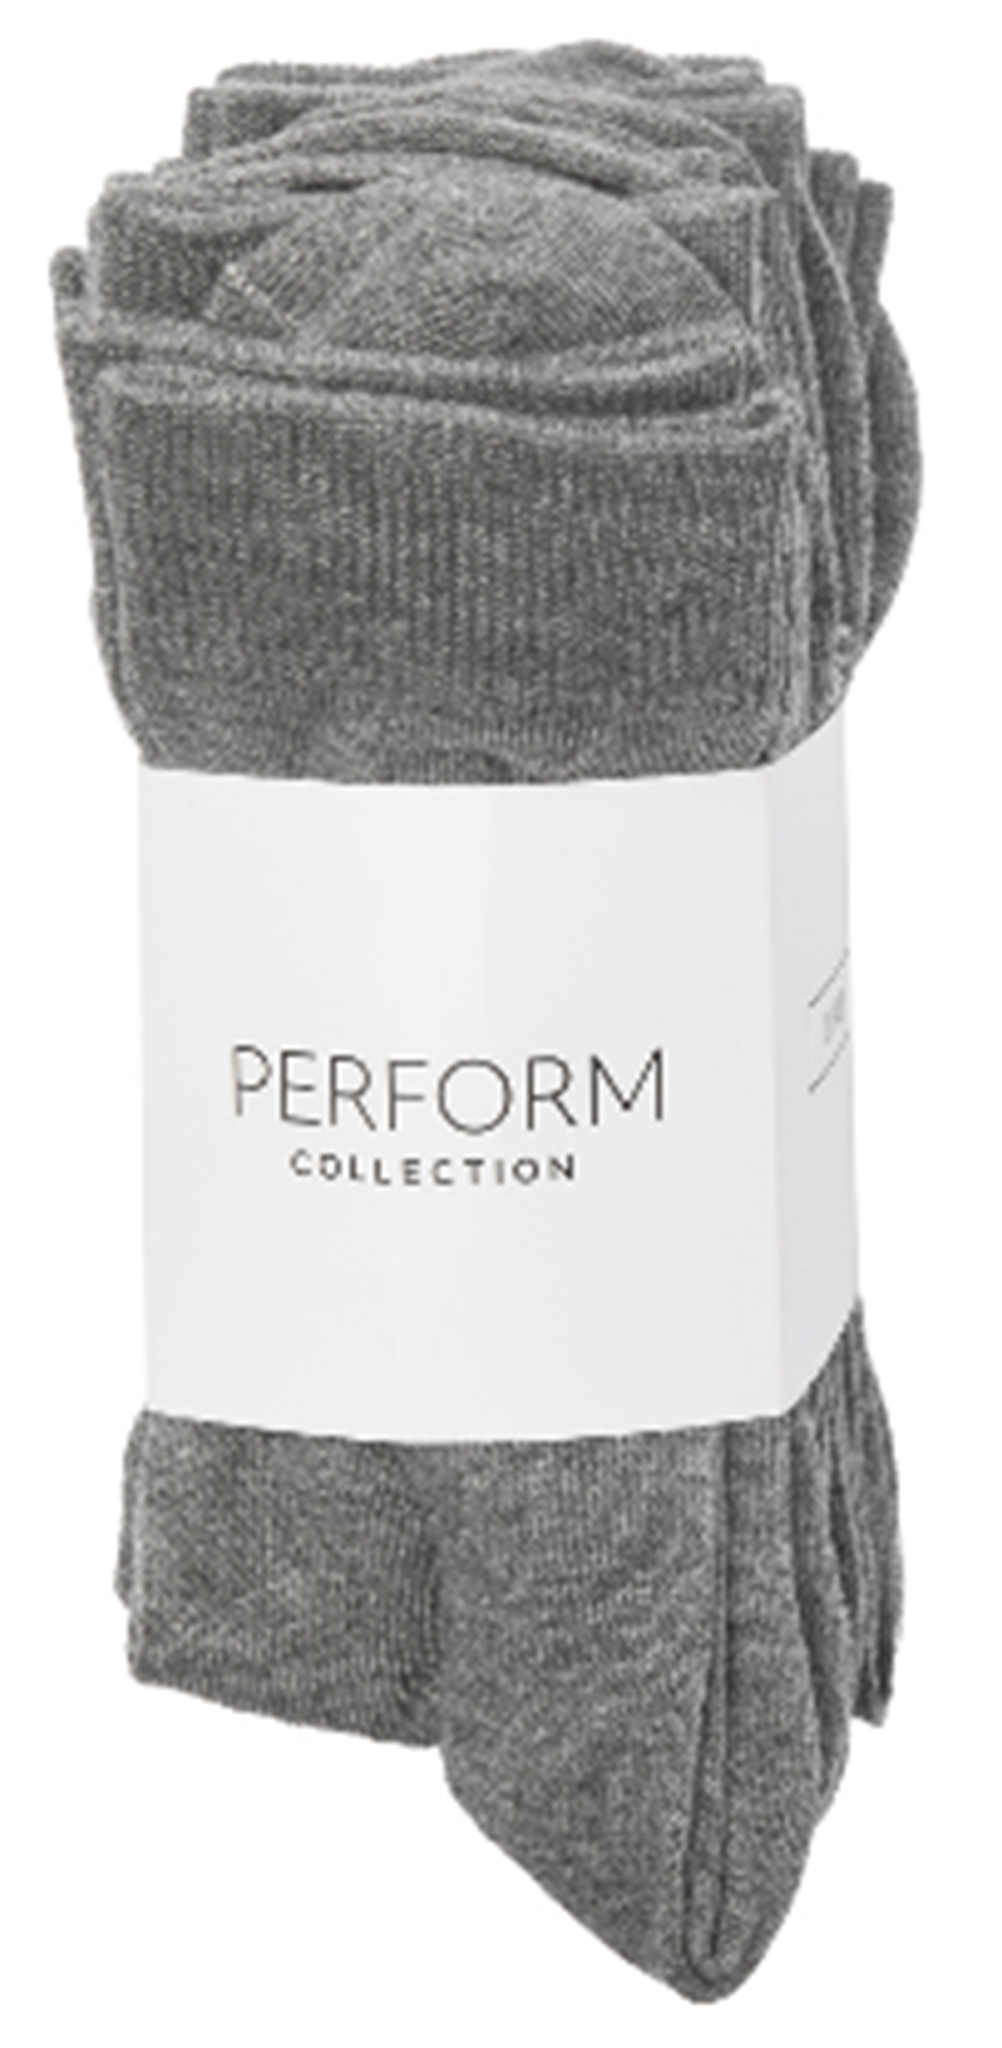 De Originale Performance Socks 10-Pack (Women) - Grey mottled